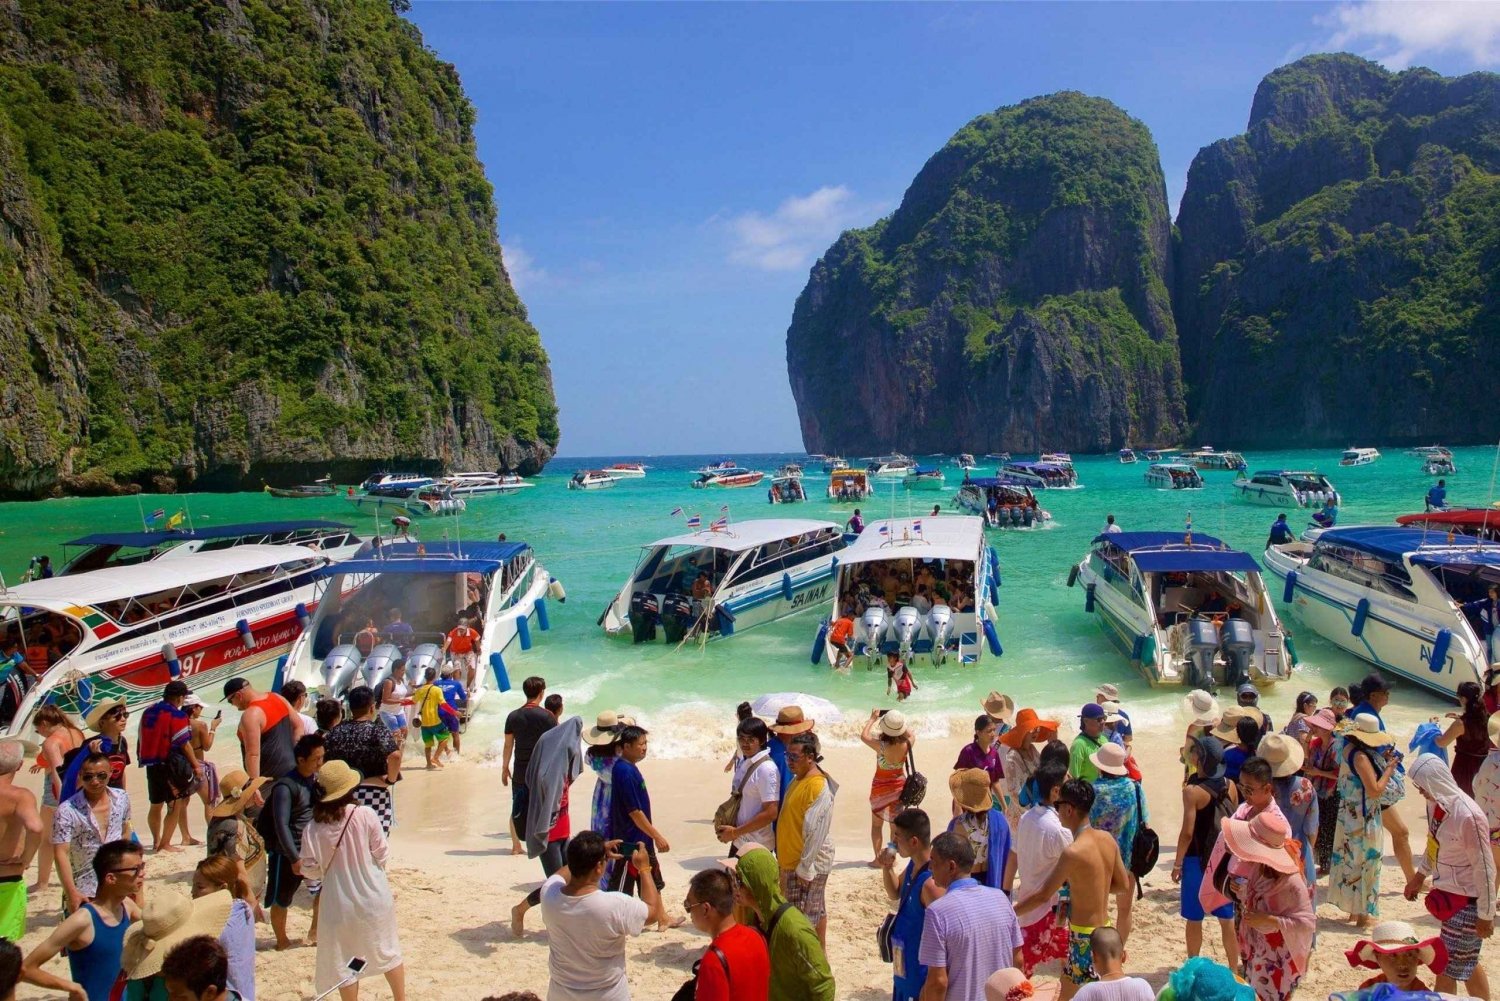 Von Phuket aus: Phi Phi Islands Speedboat Tour